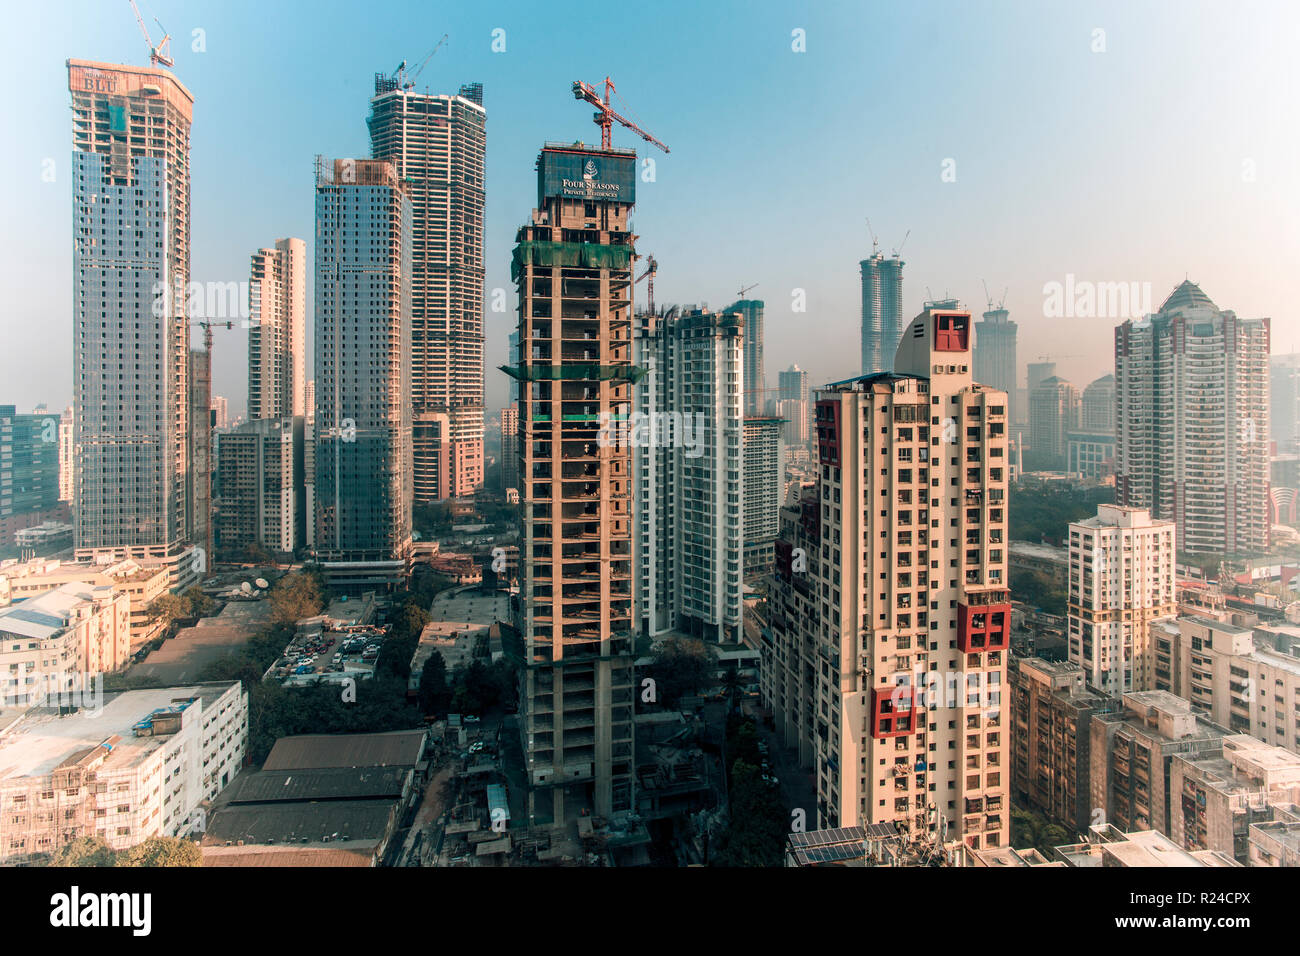 City skyline of modern office and residential buildings, Mumbai, Maharashtra, India, Asia Stock Photo